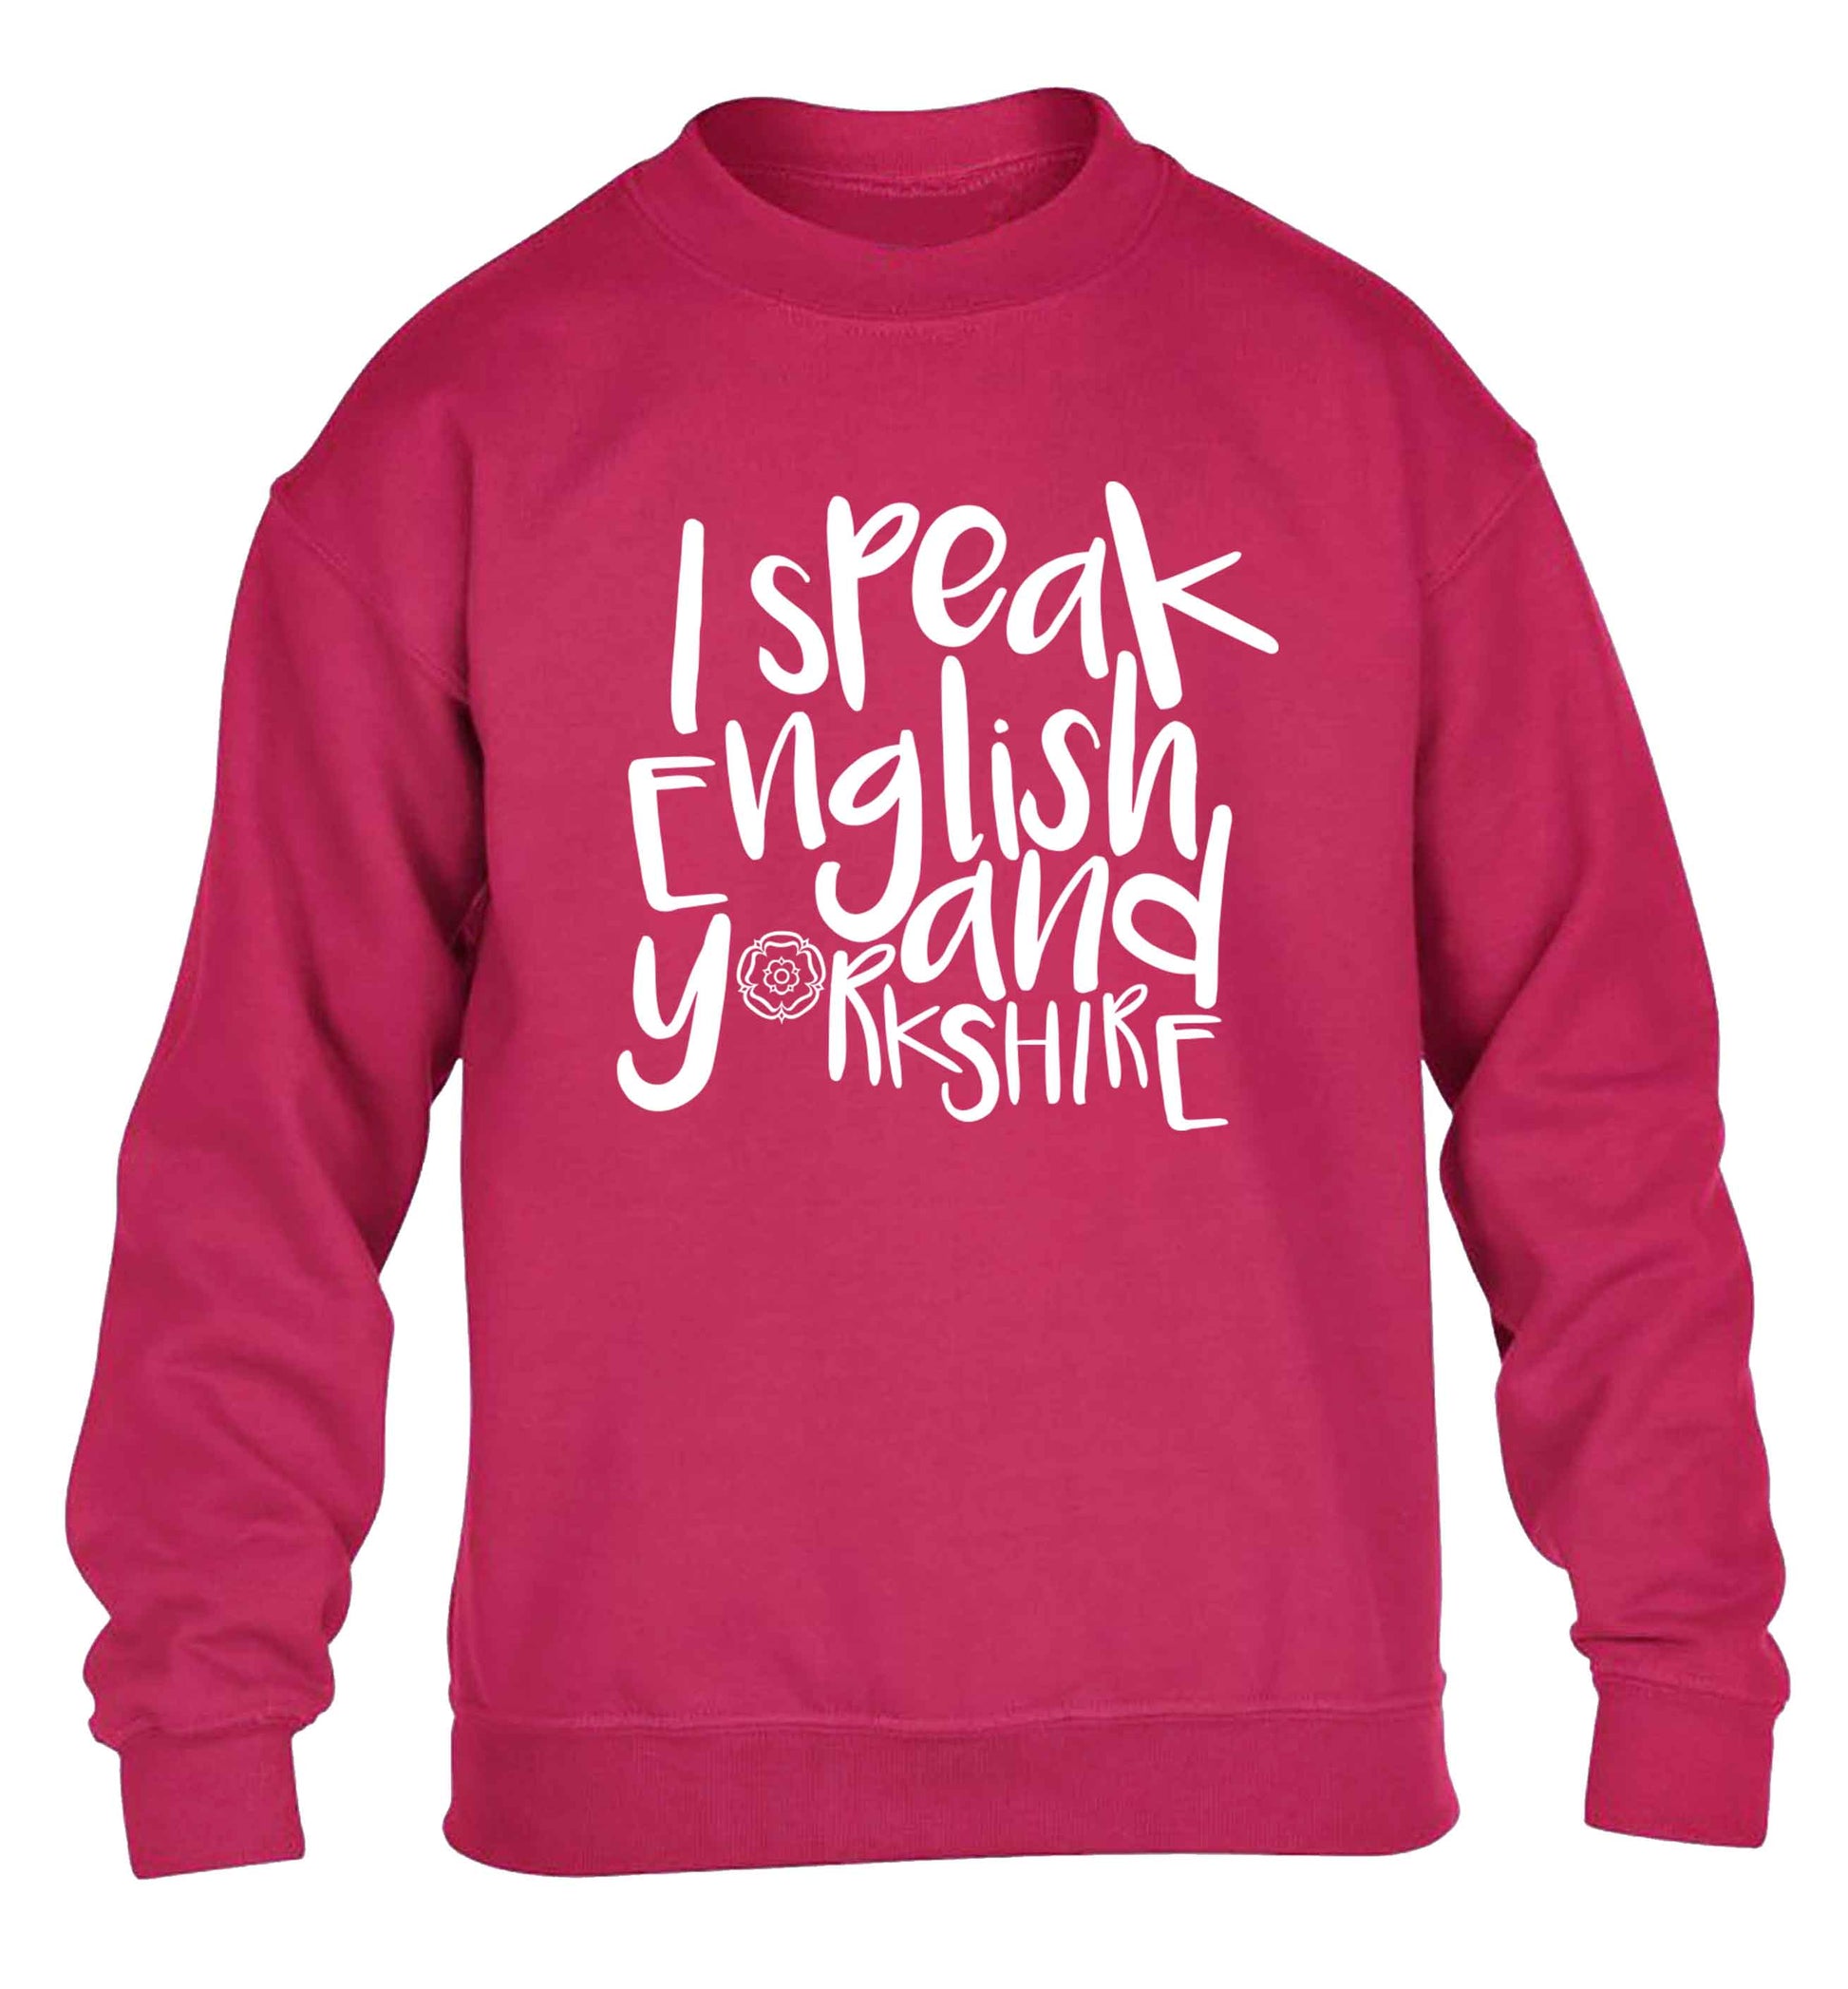 I speak English and Yorkshire children's pink sweater 12-13 Years